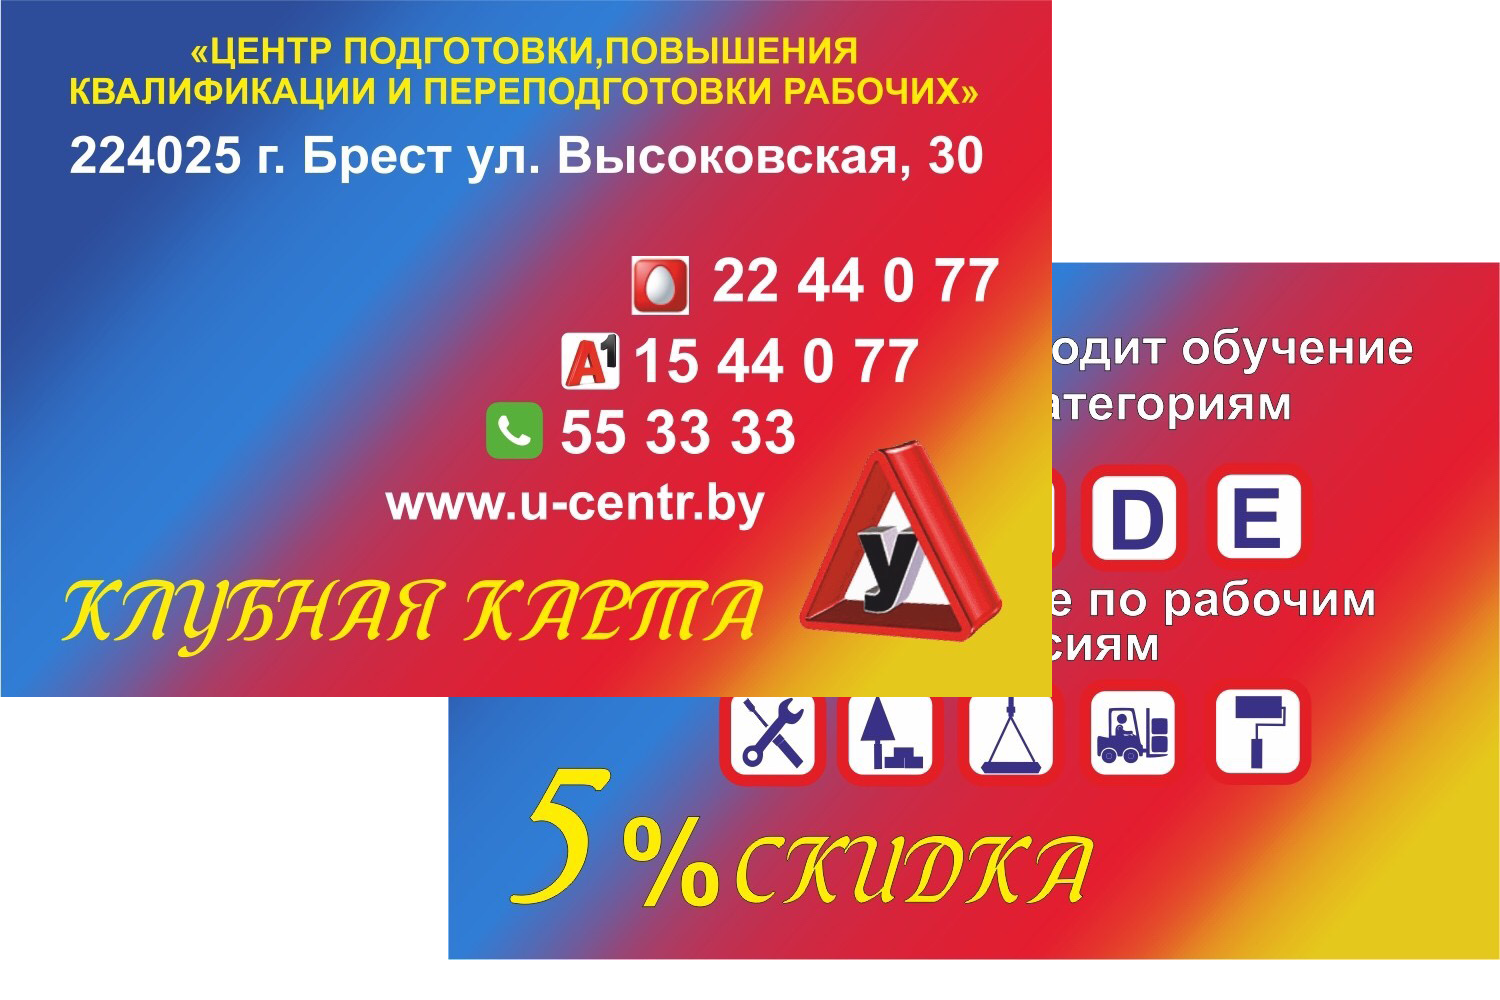 Клубная карта учебного центра в Беларуси